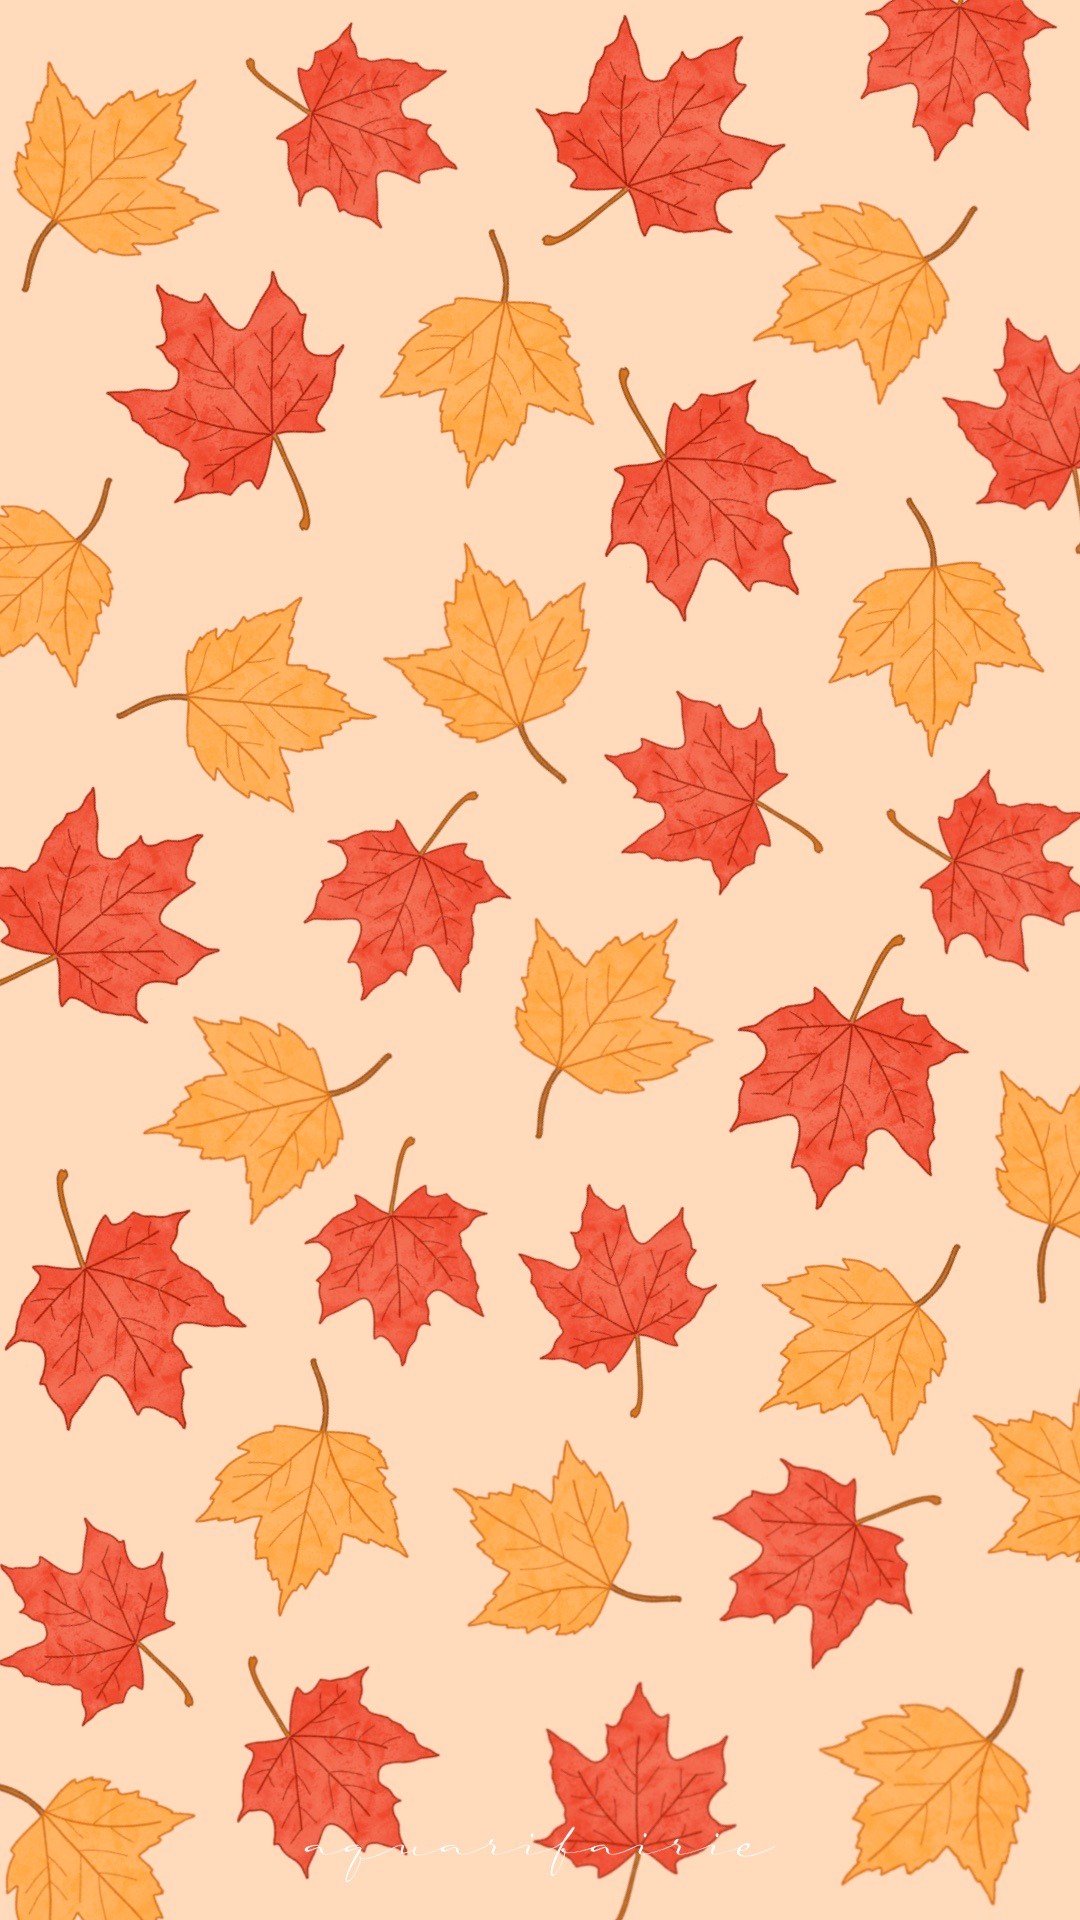 Download Autumn Fall Leaves RoyaltyFree Stock Illustration Image  Pixabay